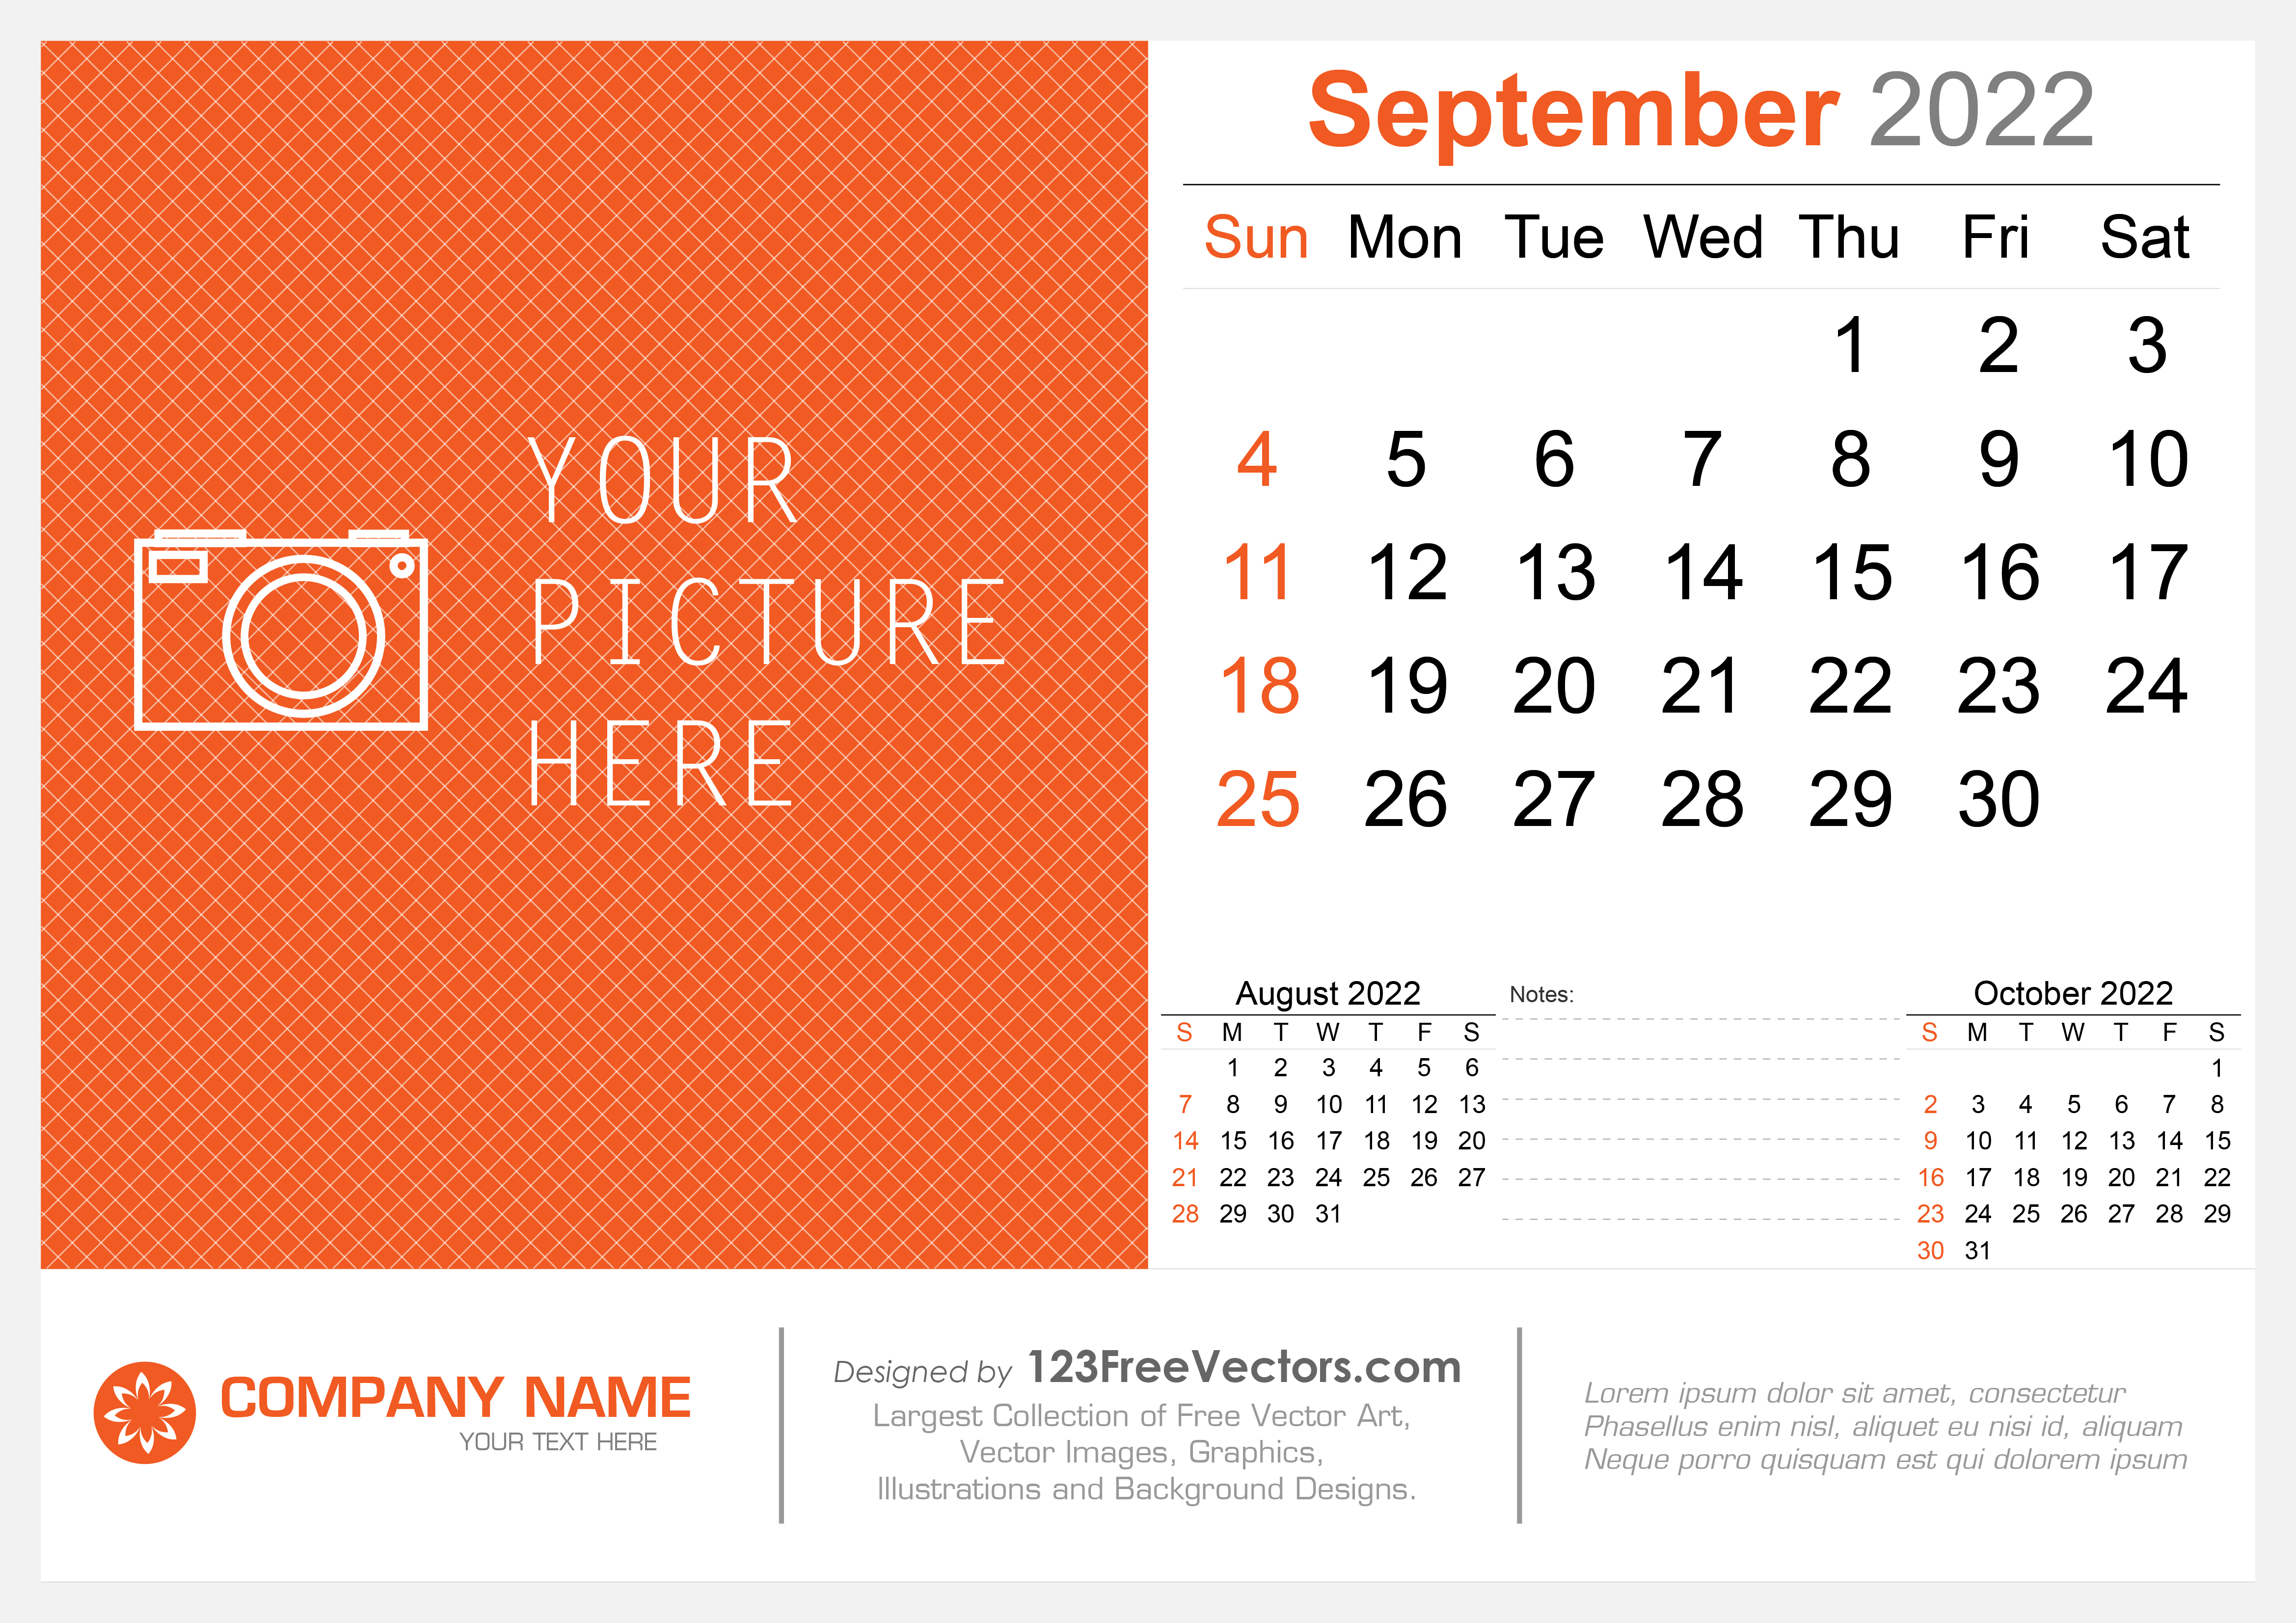 September 2022 Desktop Calendar Free September 2022 Desk Calendar